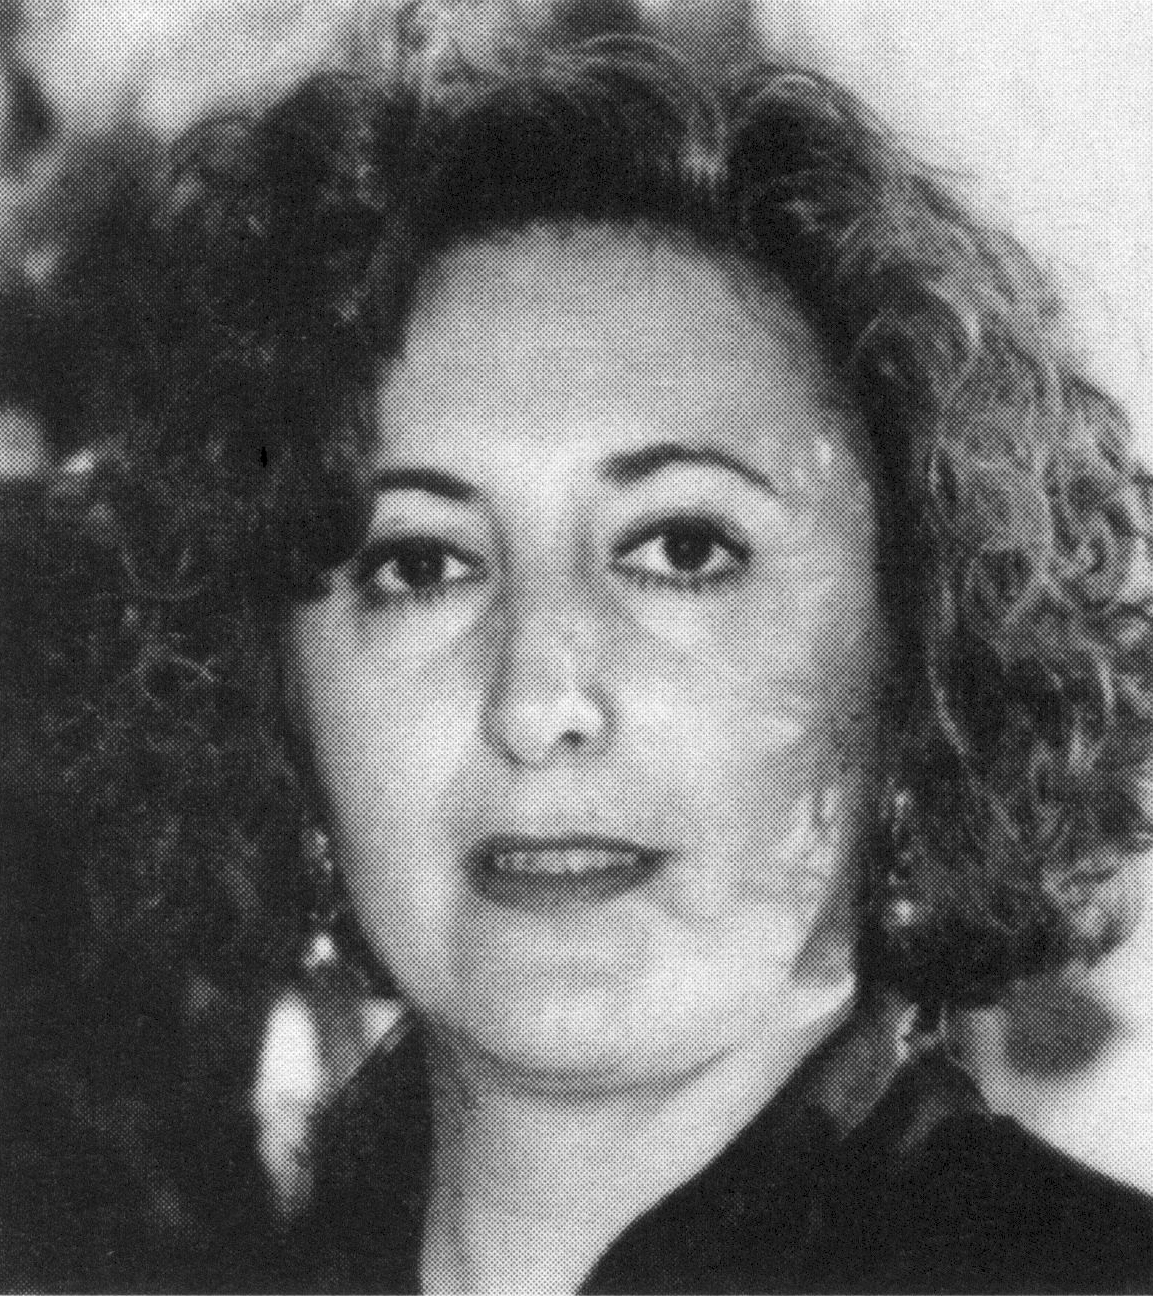 María Antonia San Felipe Adán